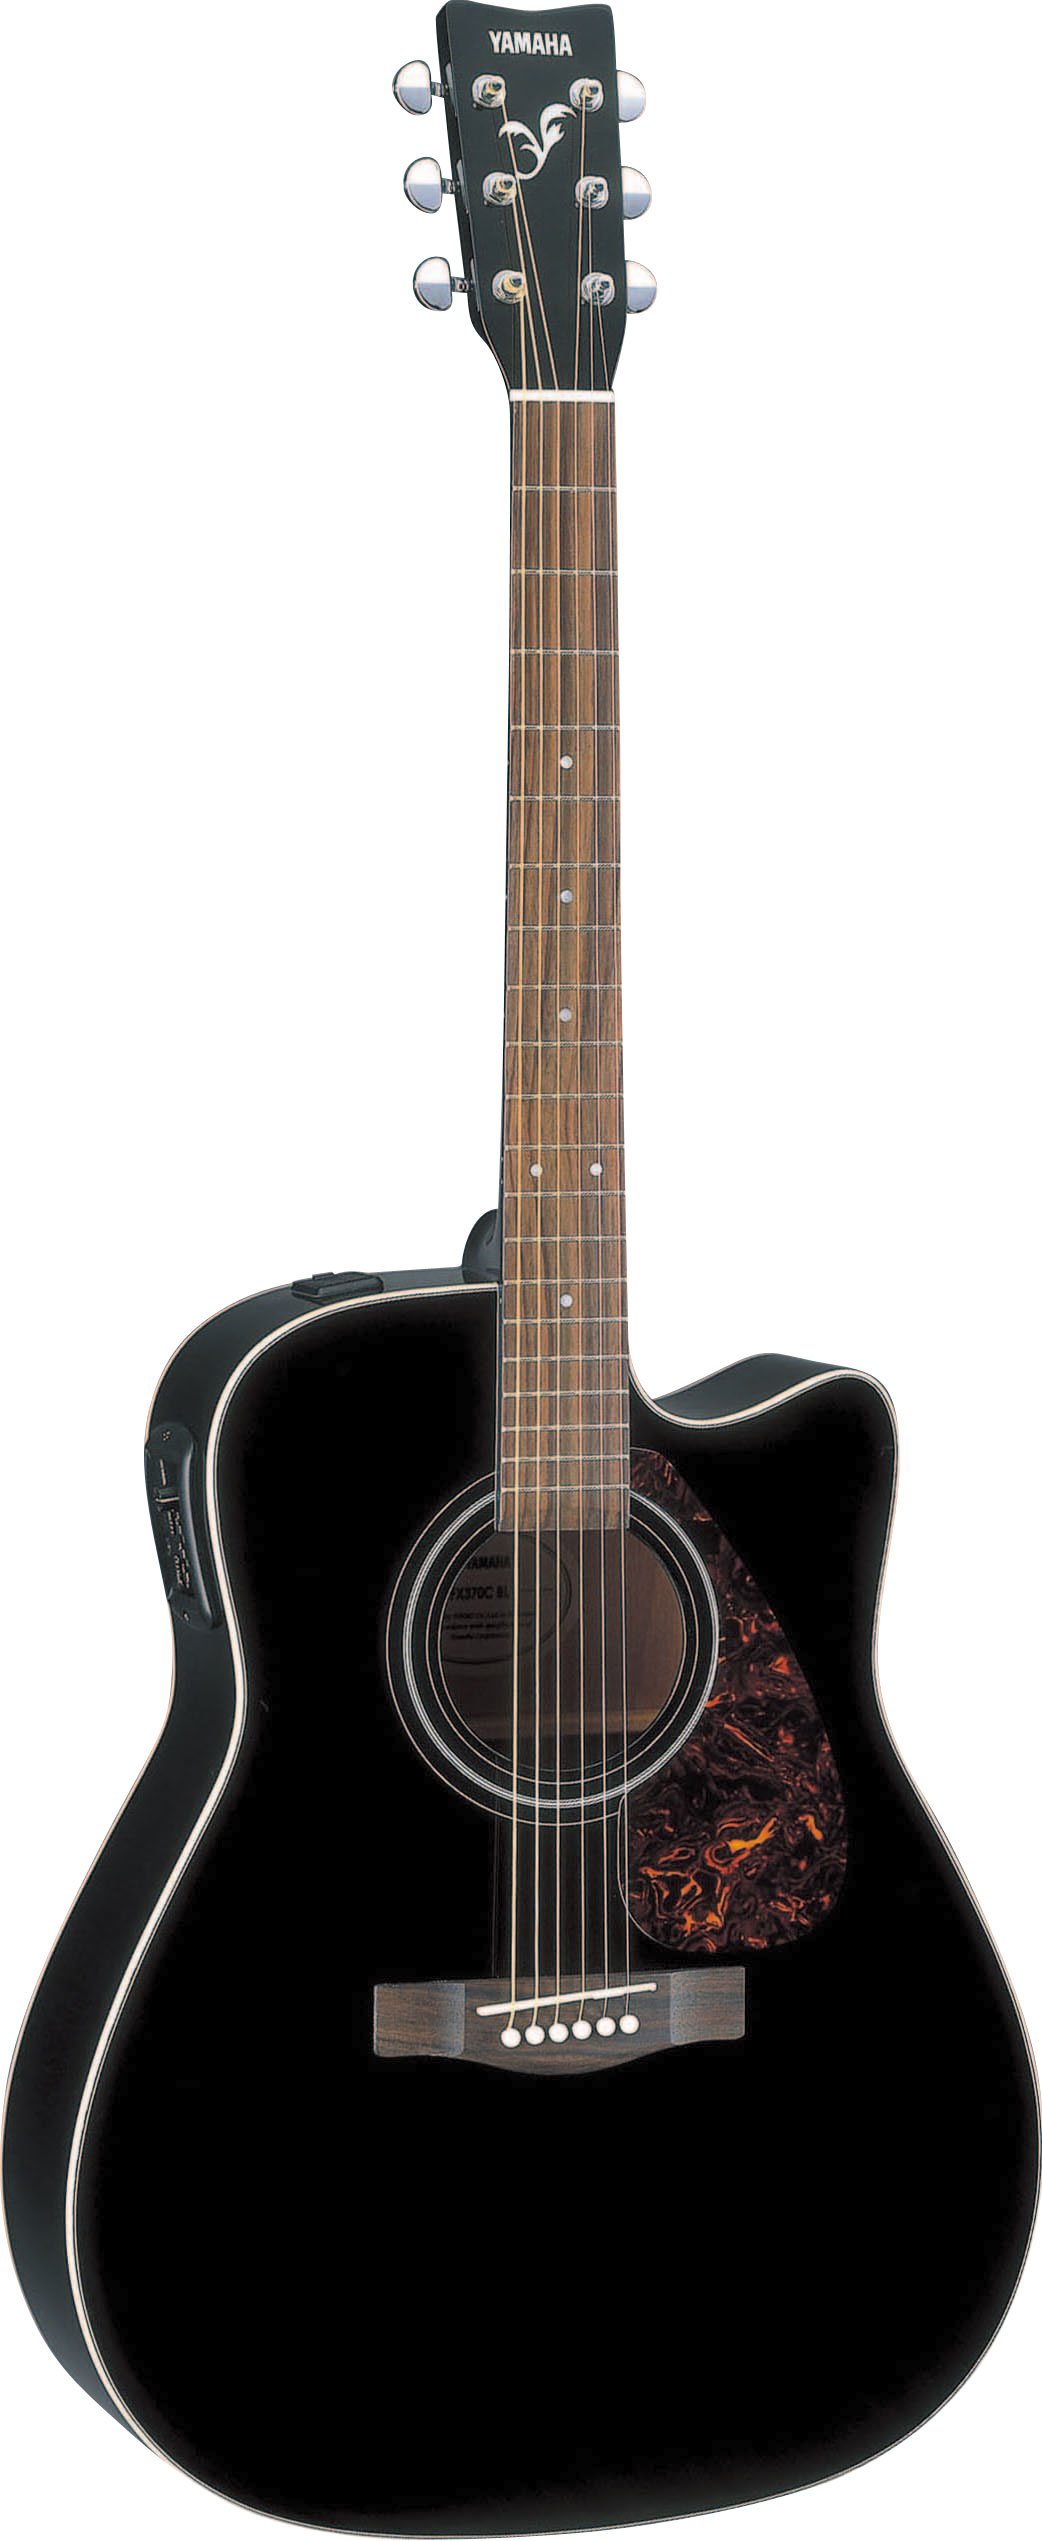 Yamaha FX370C Elektroakustische Gitarre mit Cutaway: schwarz